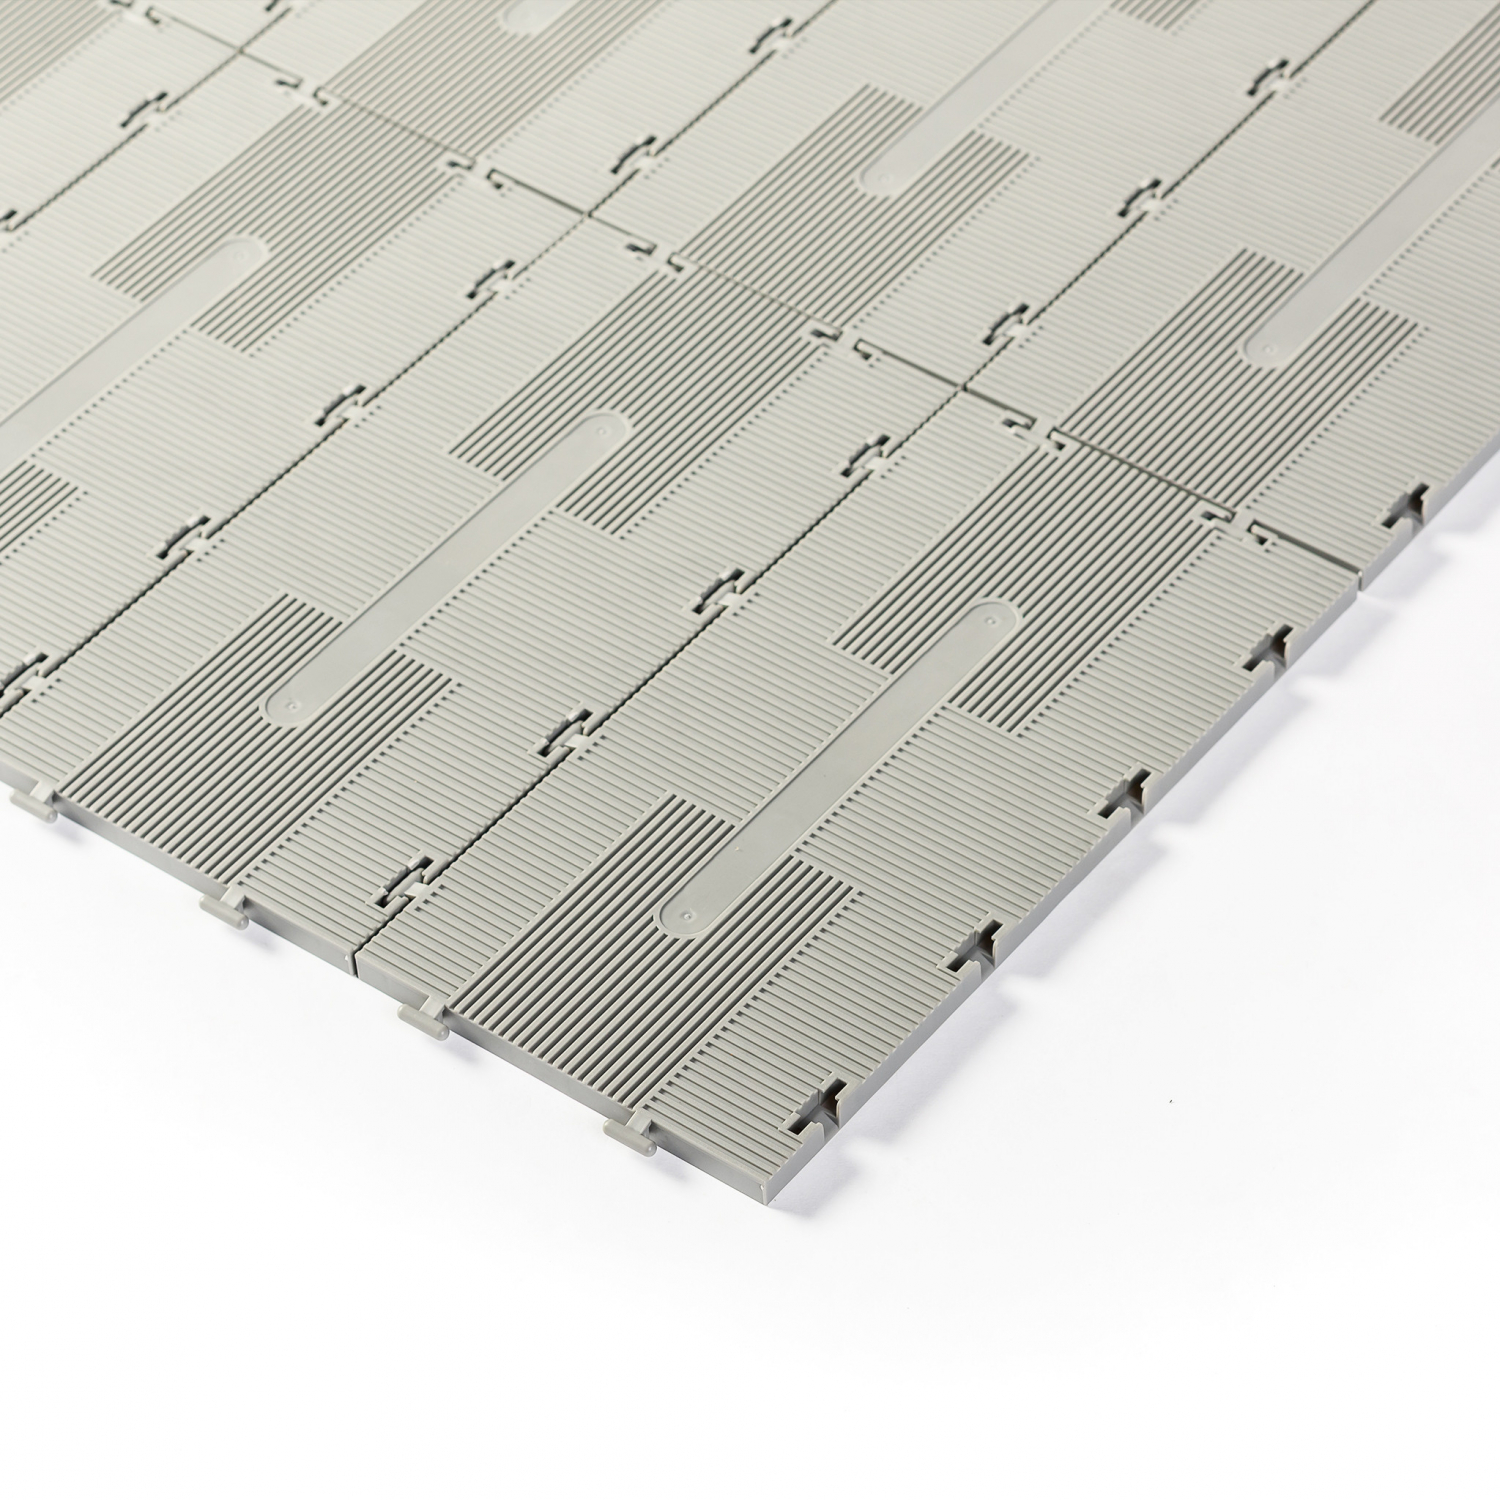 Rola-Trac Lite | Multi-purpose plastic floor tiles for indoor or outdoor use